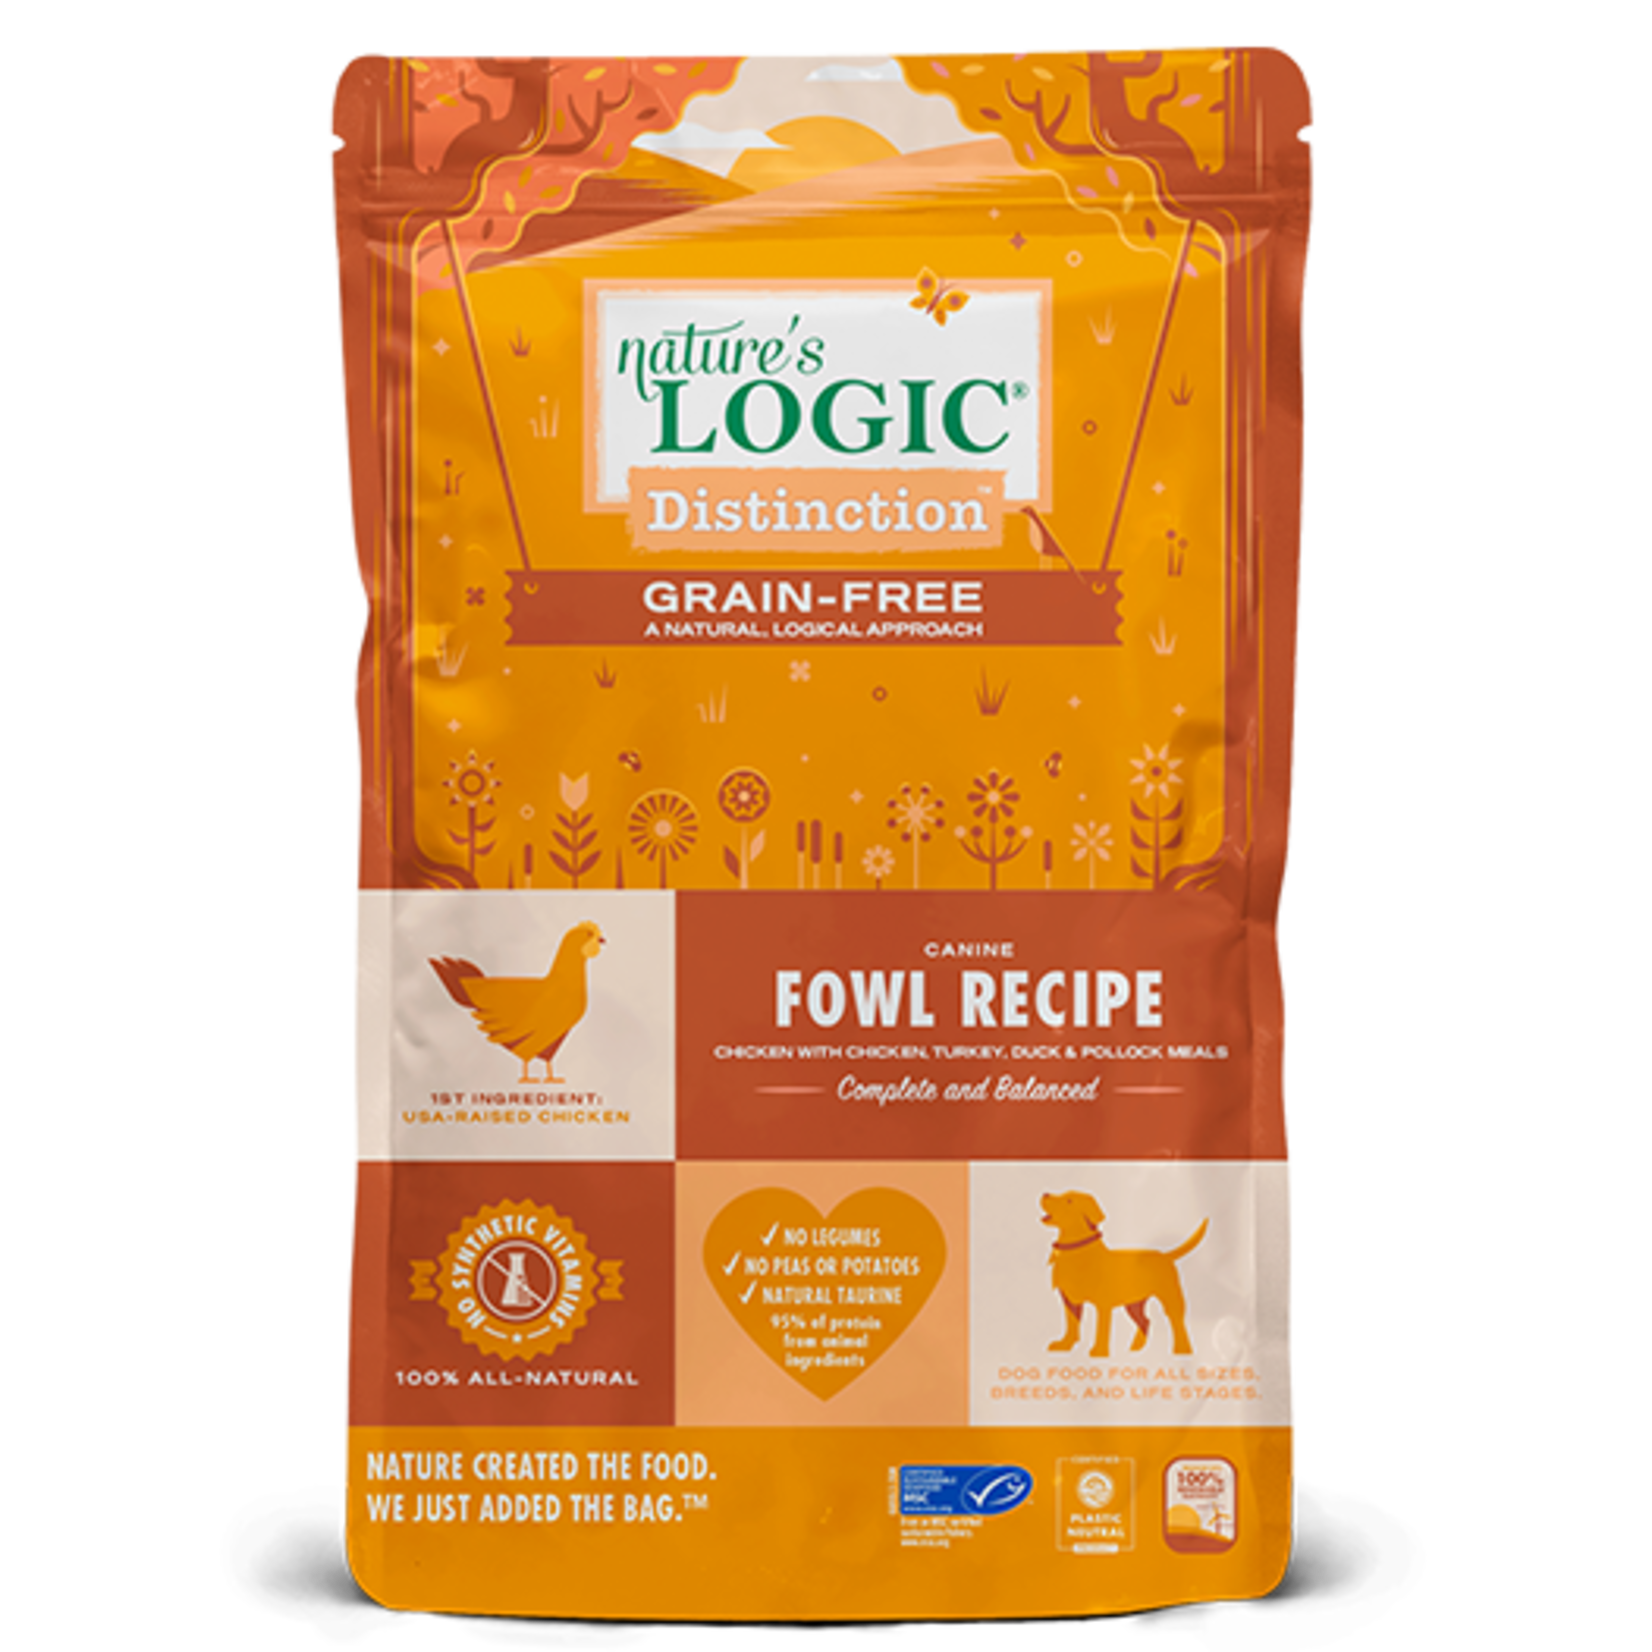 Nature's Logic Distinction - Grain-Free Fowl Recipe Dry Dog Food